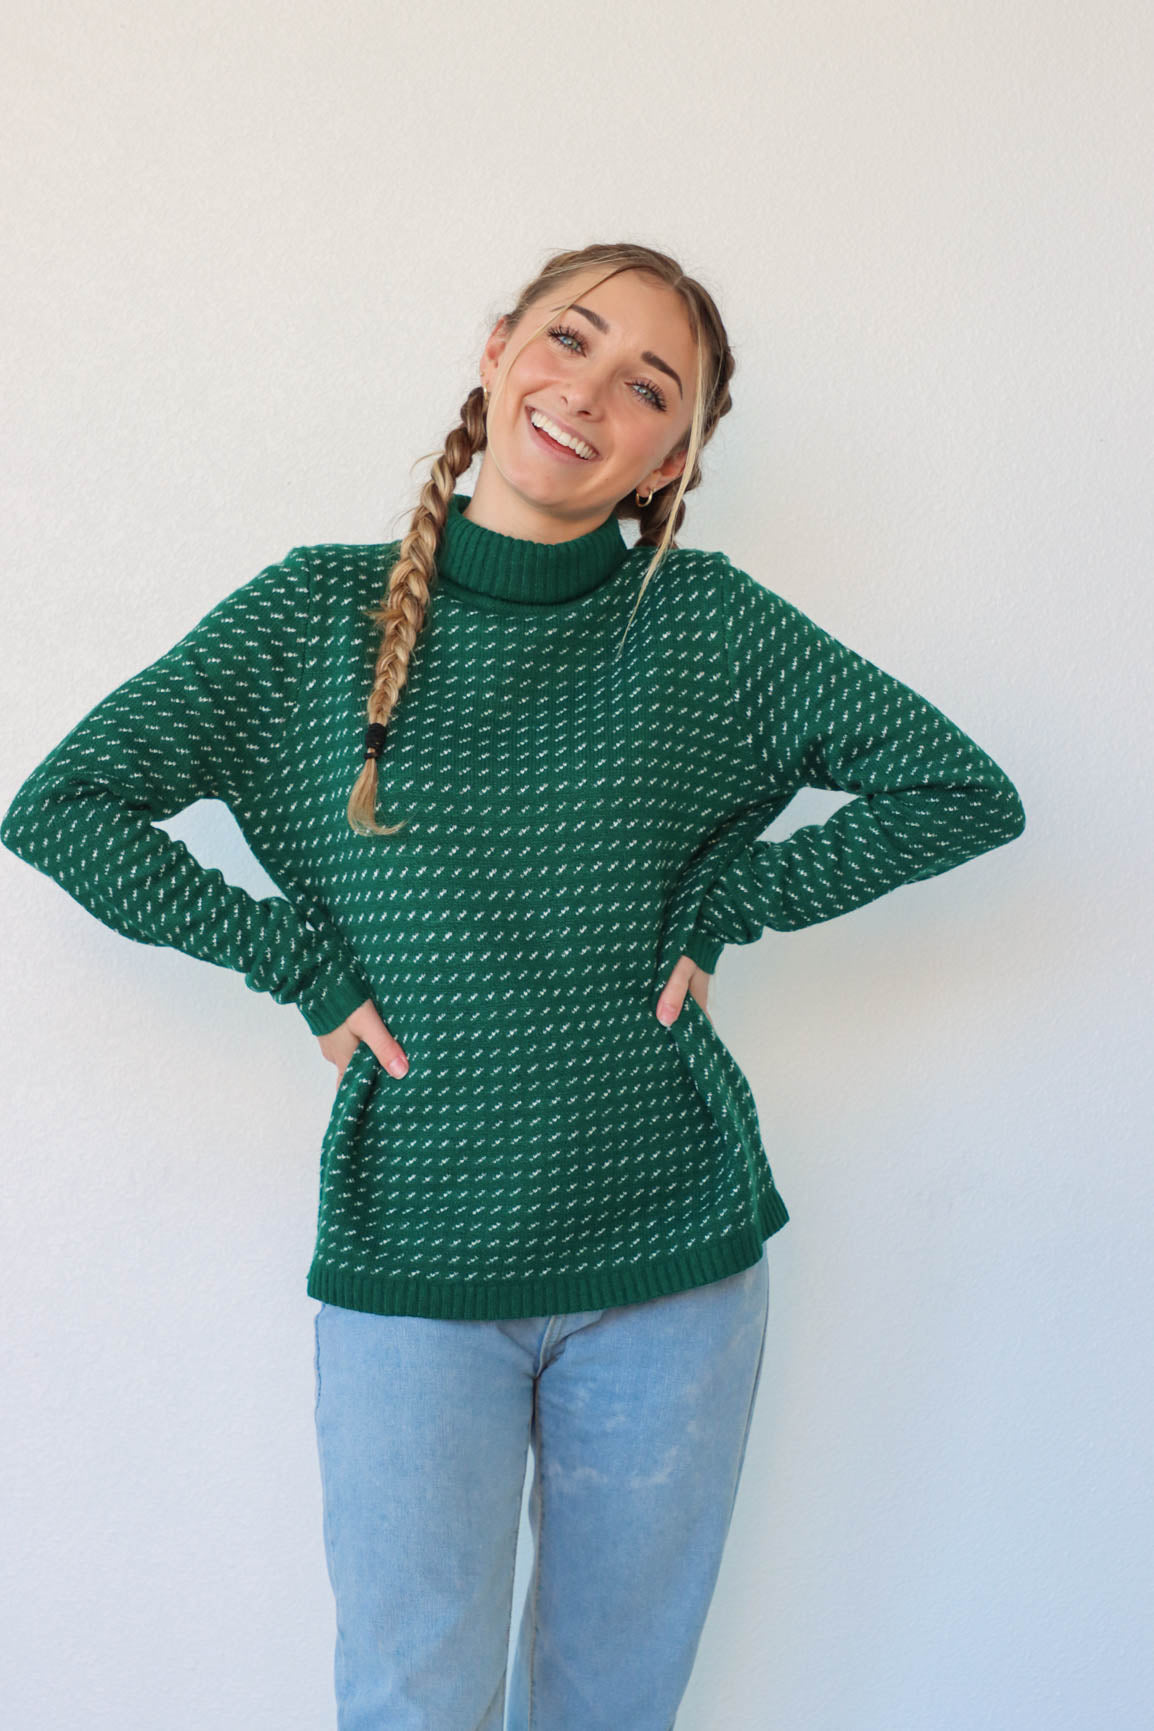 girl wearing green knit turtleneck sweater